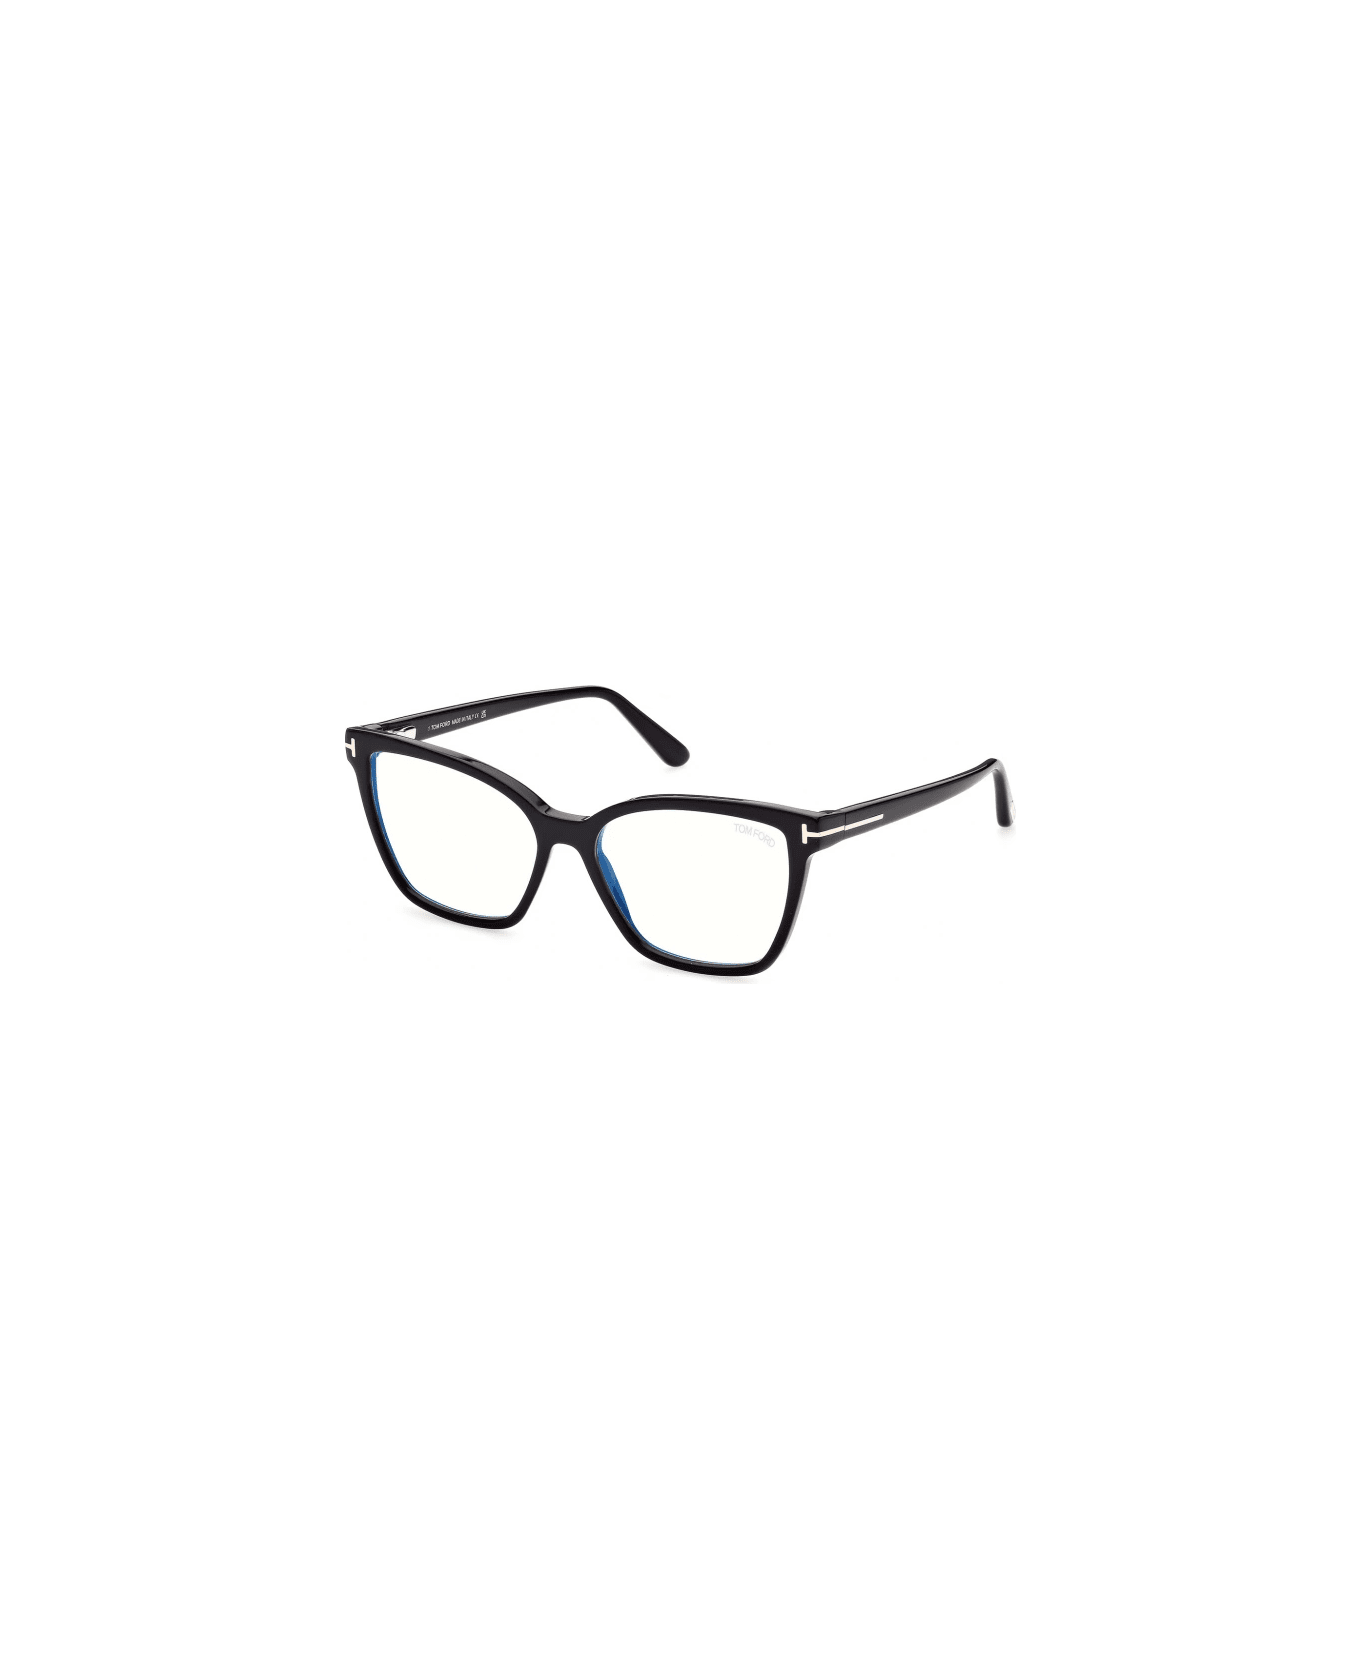 Tom Ford Eyewear FT5812 - 001 Glasses - Nero アイウェア